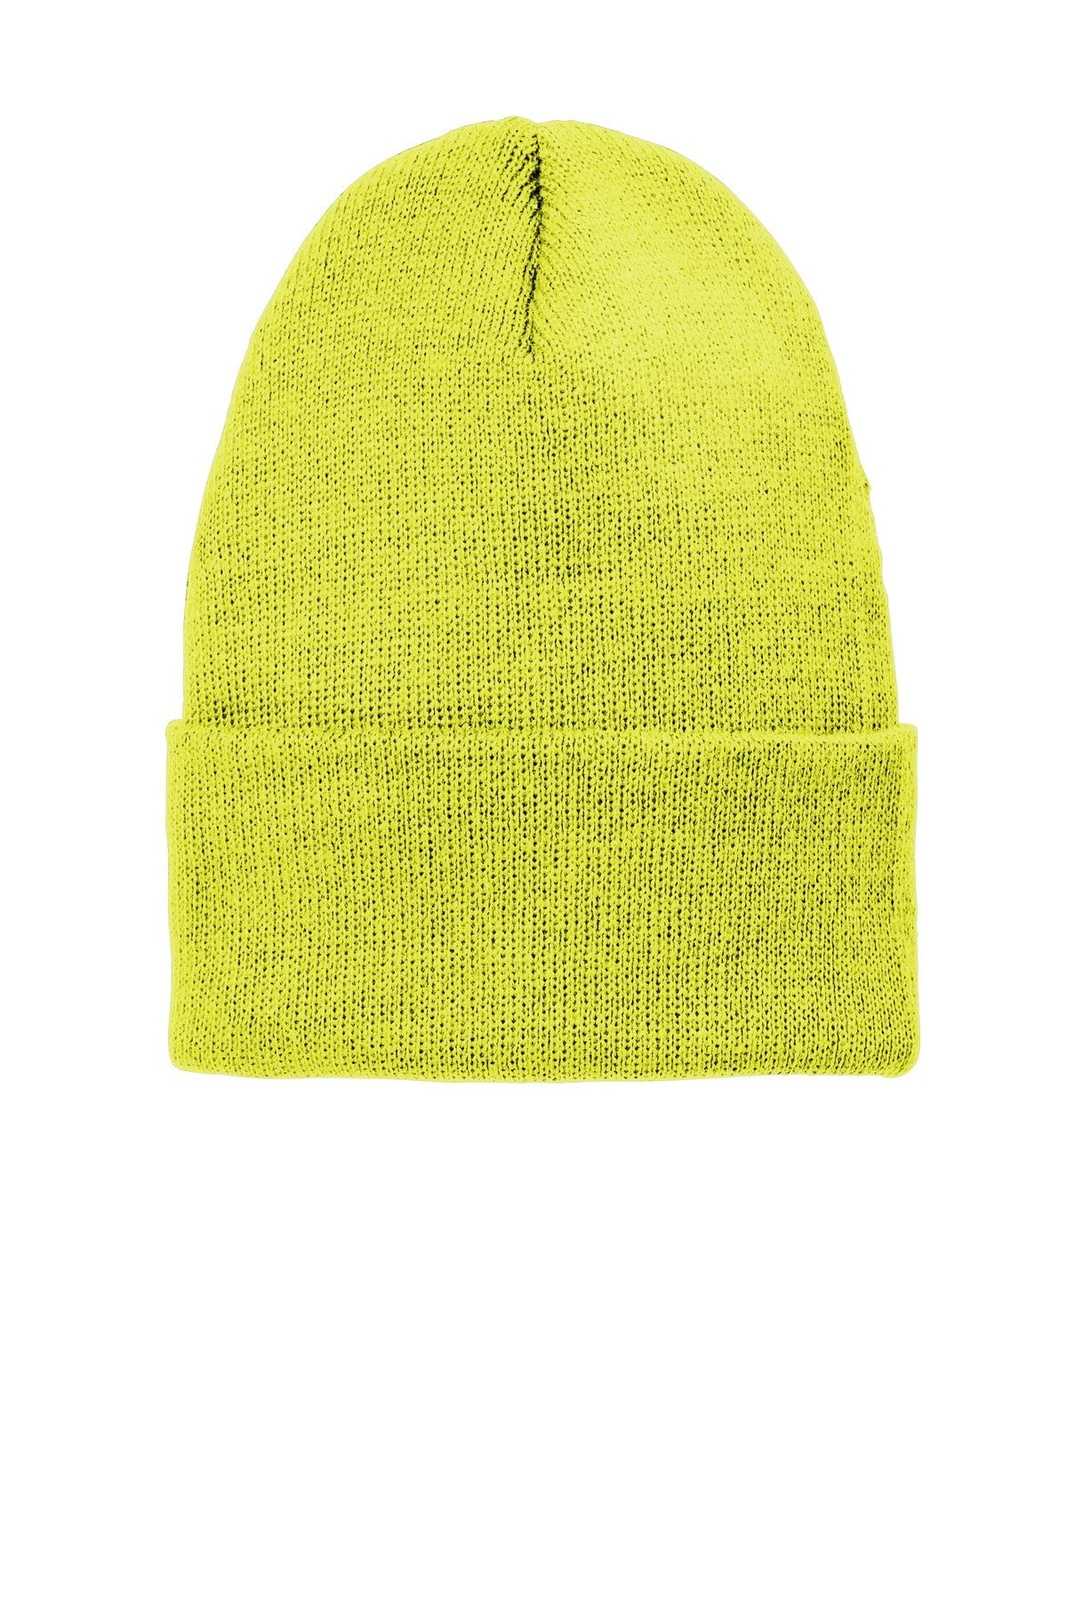 Volunteer Knitwear VL10 Chore Beanie - Neon Yellow - HIT a Double - 1